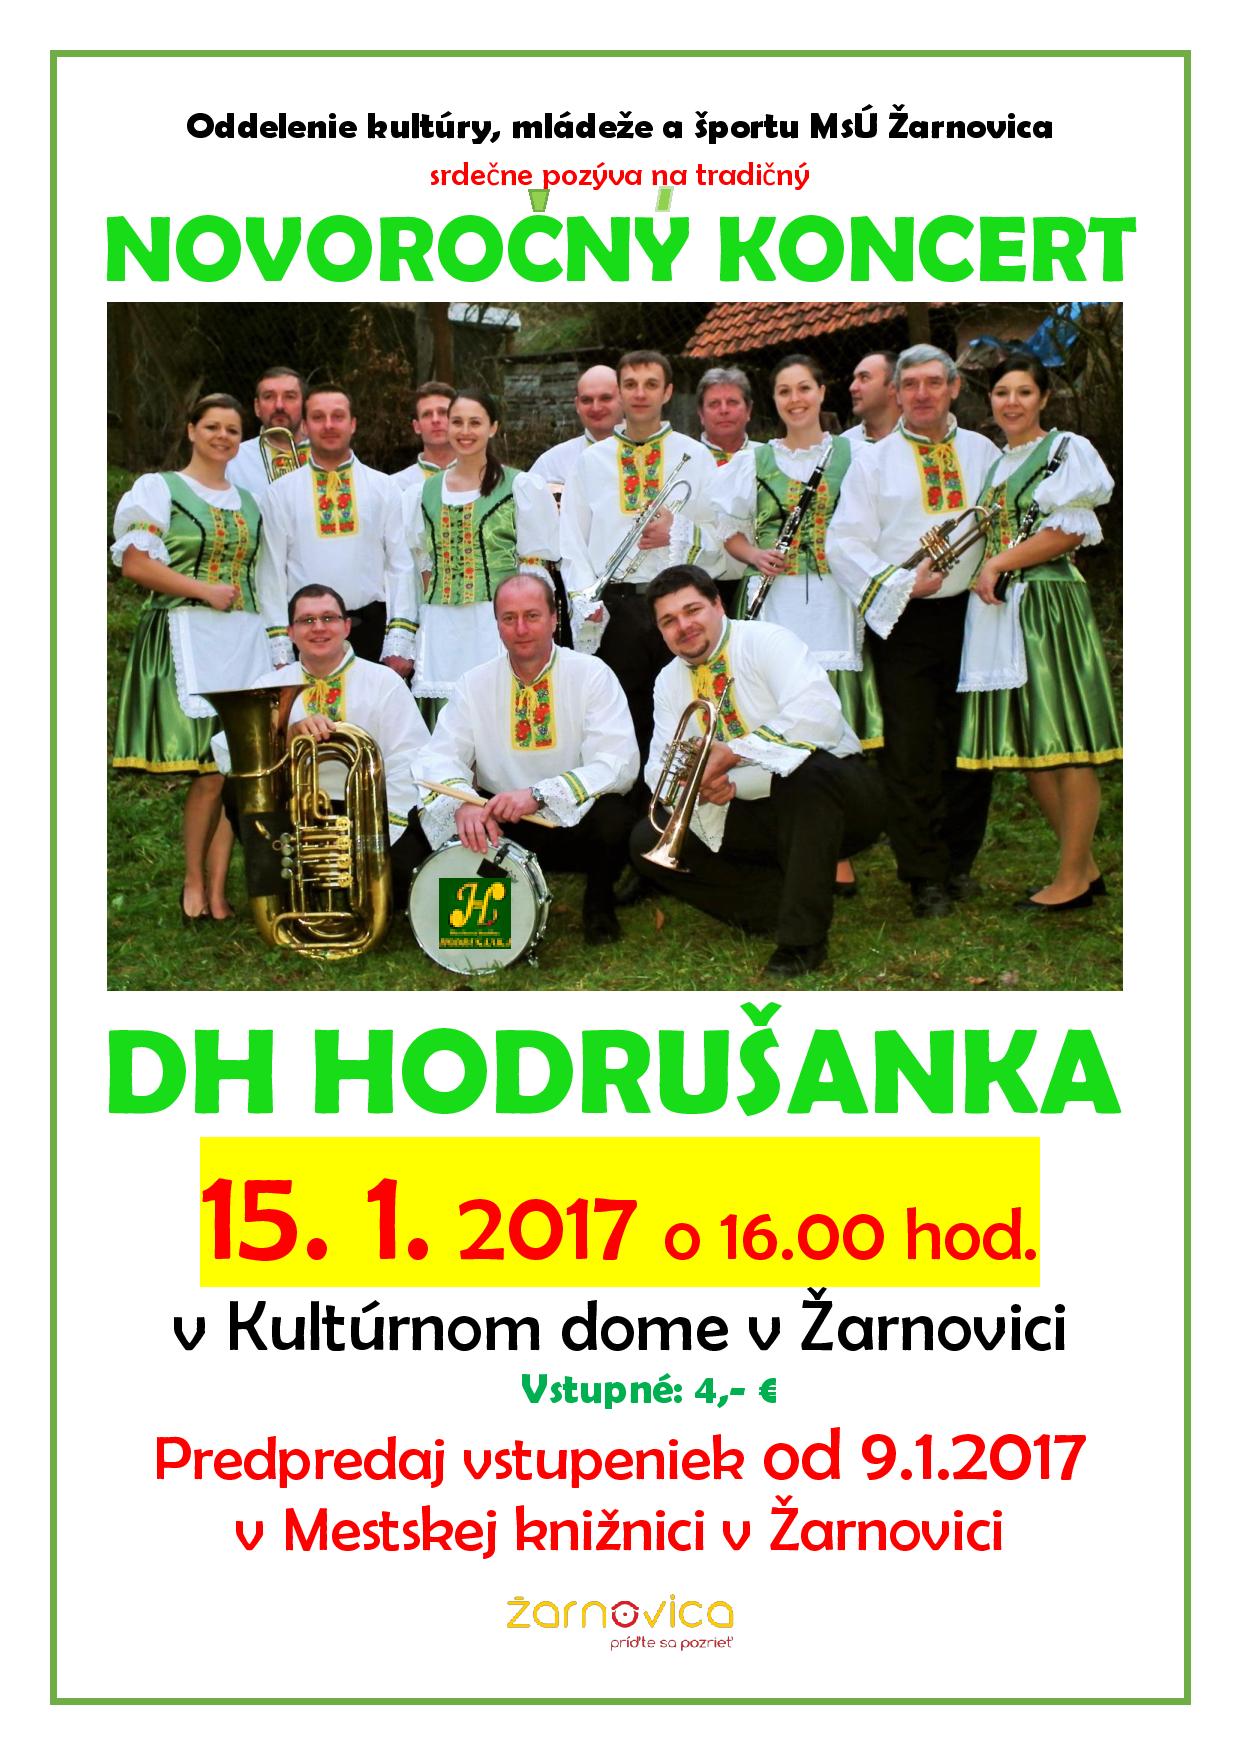 Novoron koncert DH Hodruanka 2017 arnovica